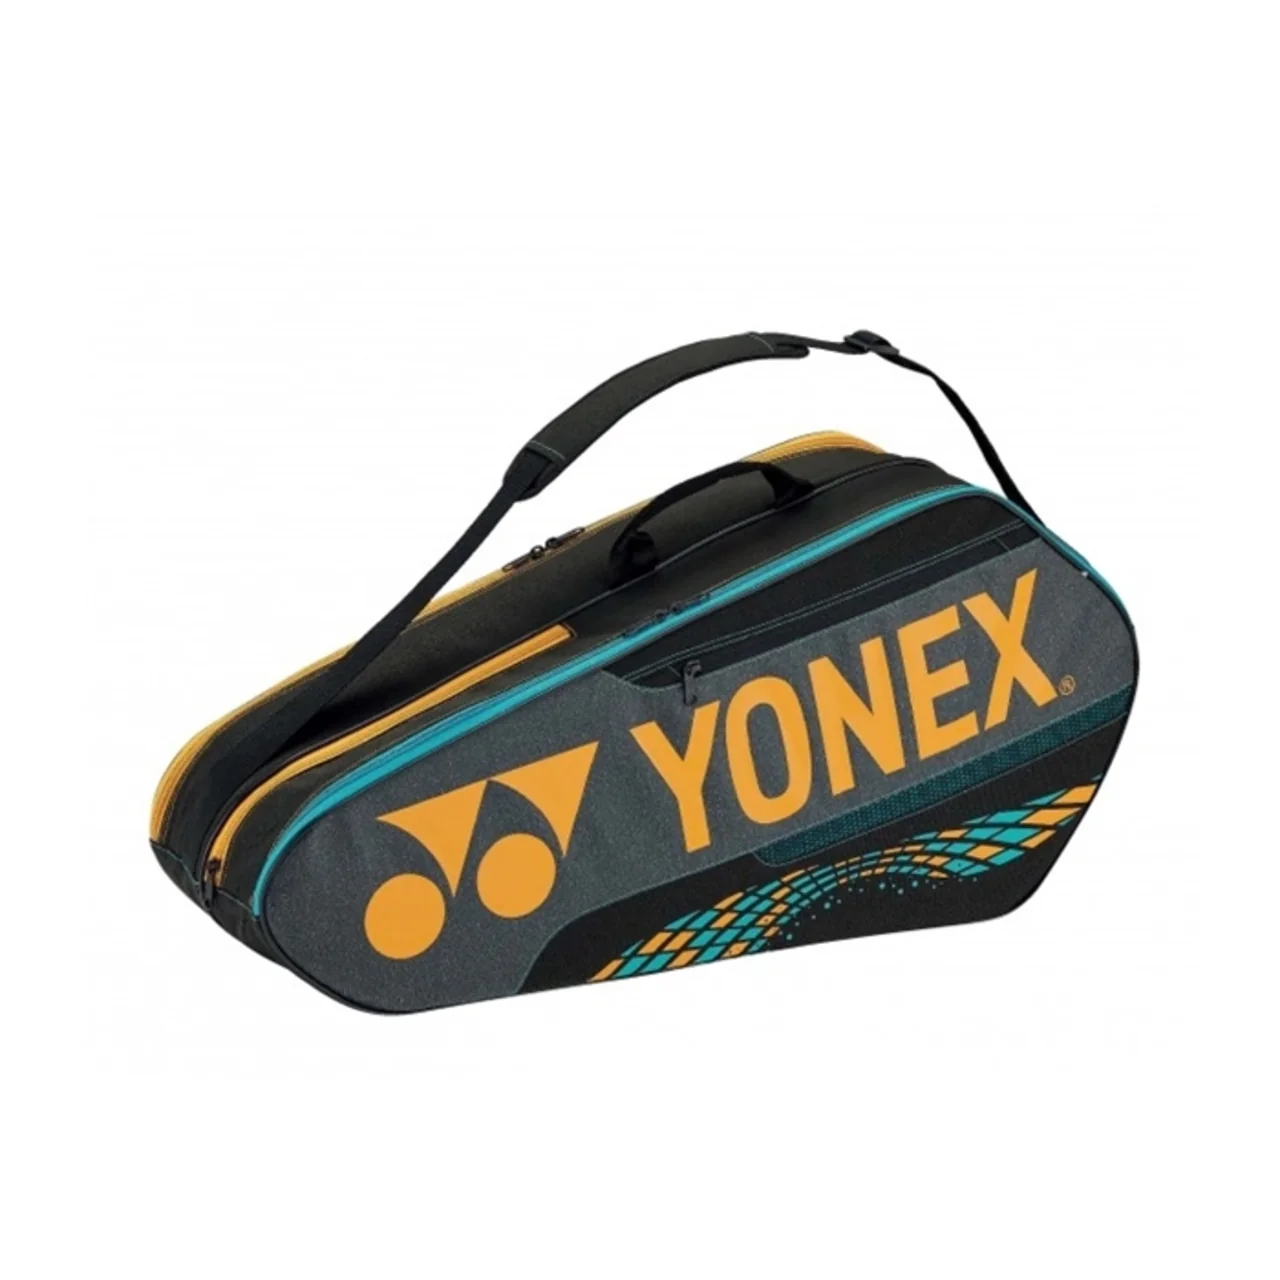 Yonex Team Racketbag x6 Camel Gold